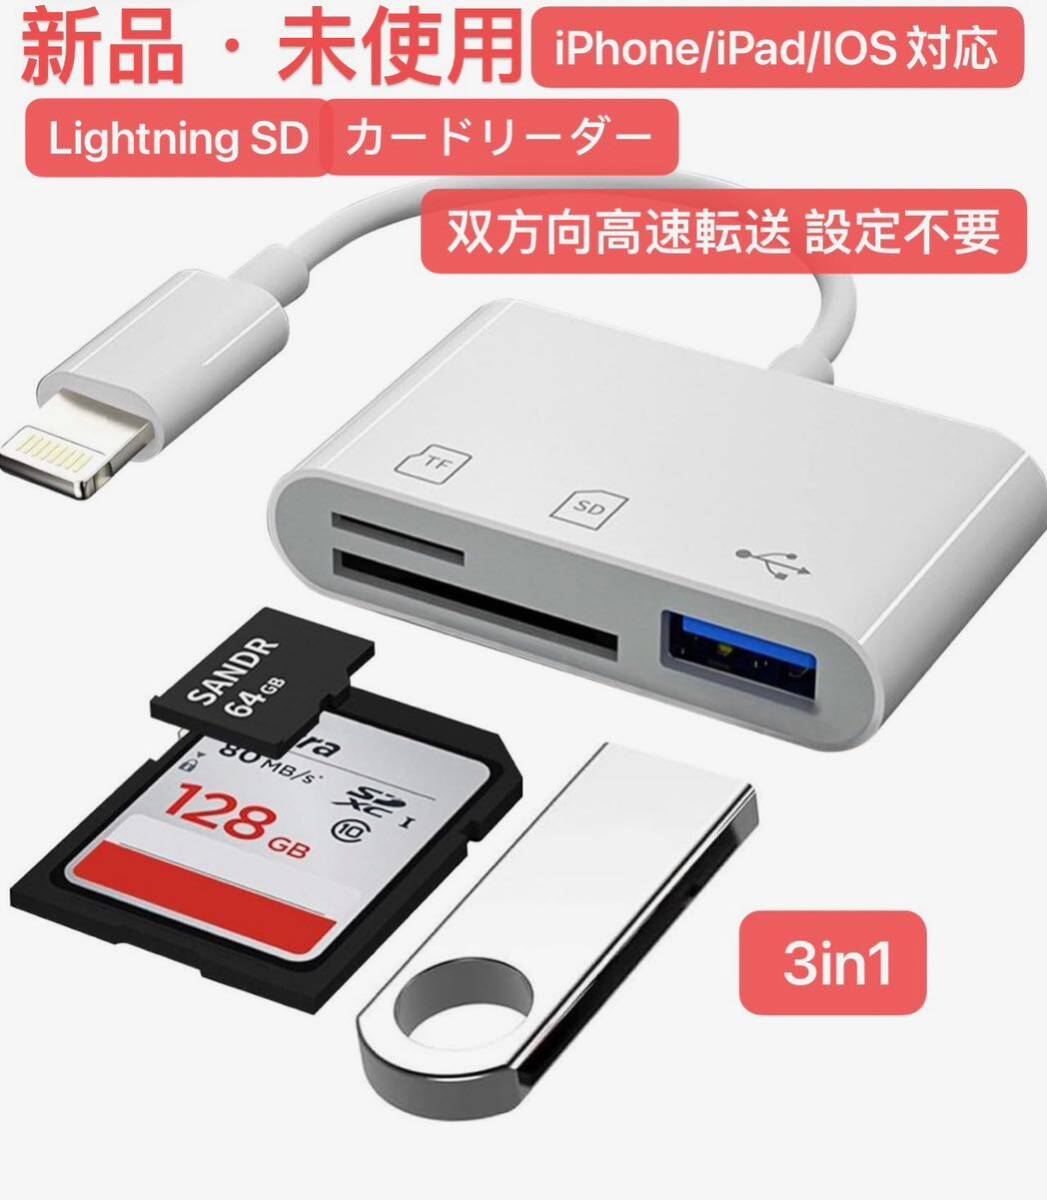 3in1 ライトニング SDカードカメラリーダー メモリカードリーダー Lighting to USBアダプタ SDカード/TFカード/USB3.0 OTG機能読み書き同時の画像1